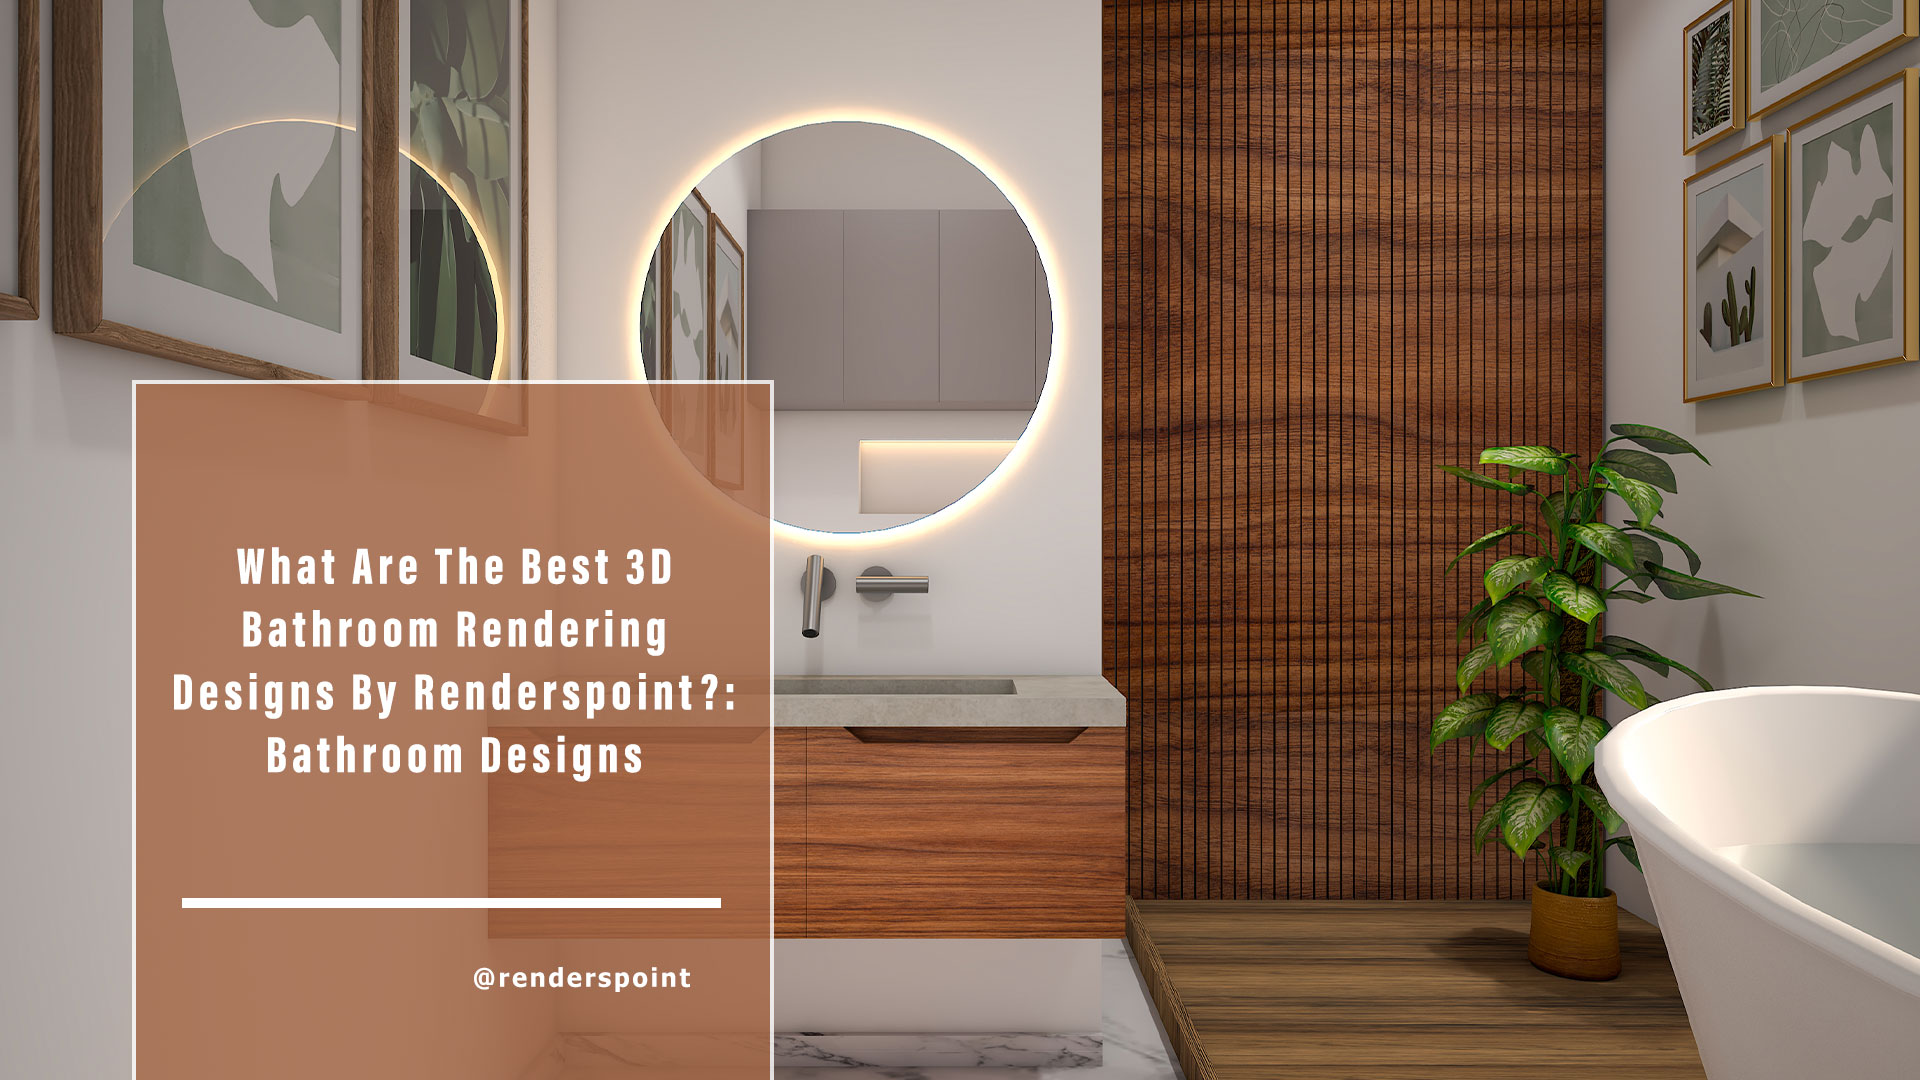 What are the Best 3D Bathroom Rendering Designs by Renderspoint